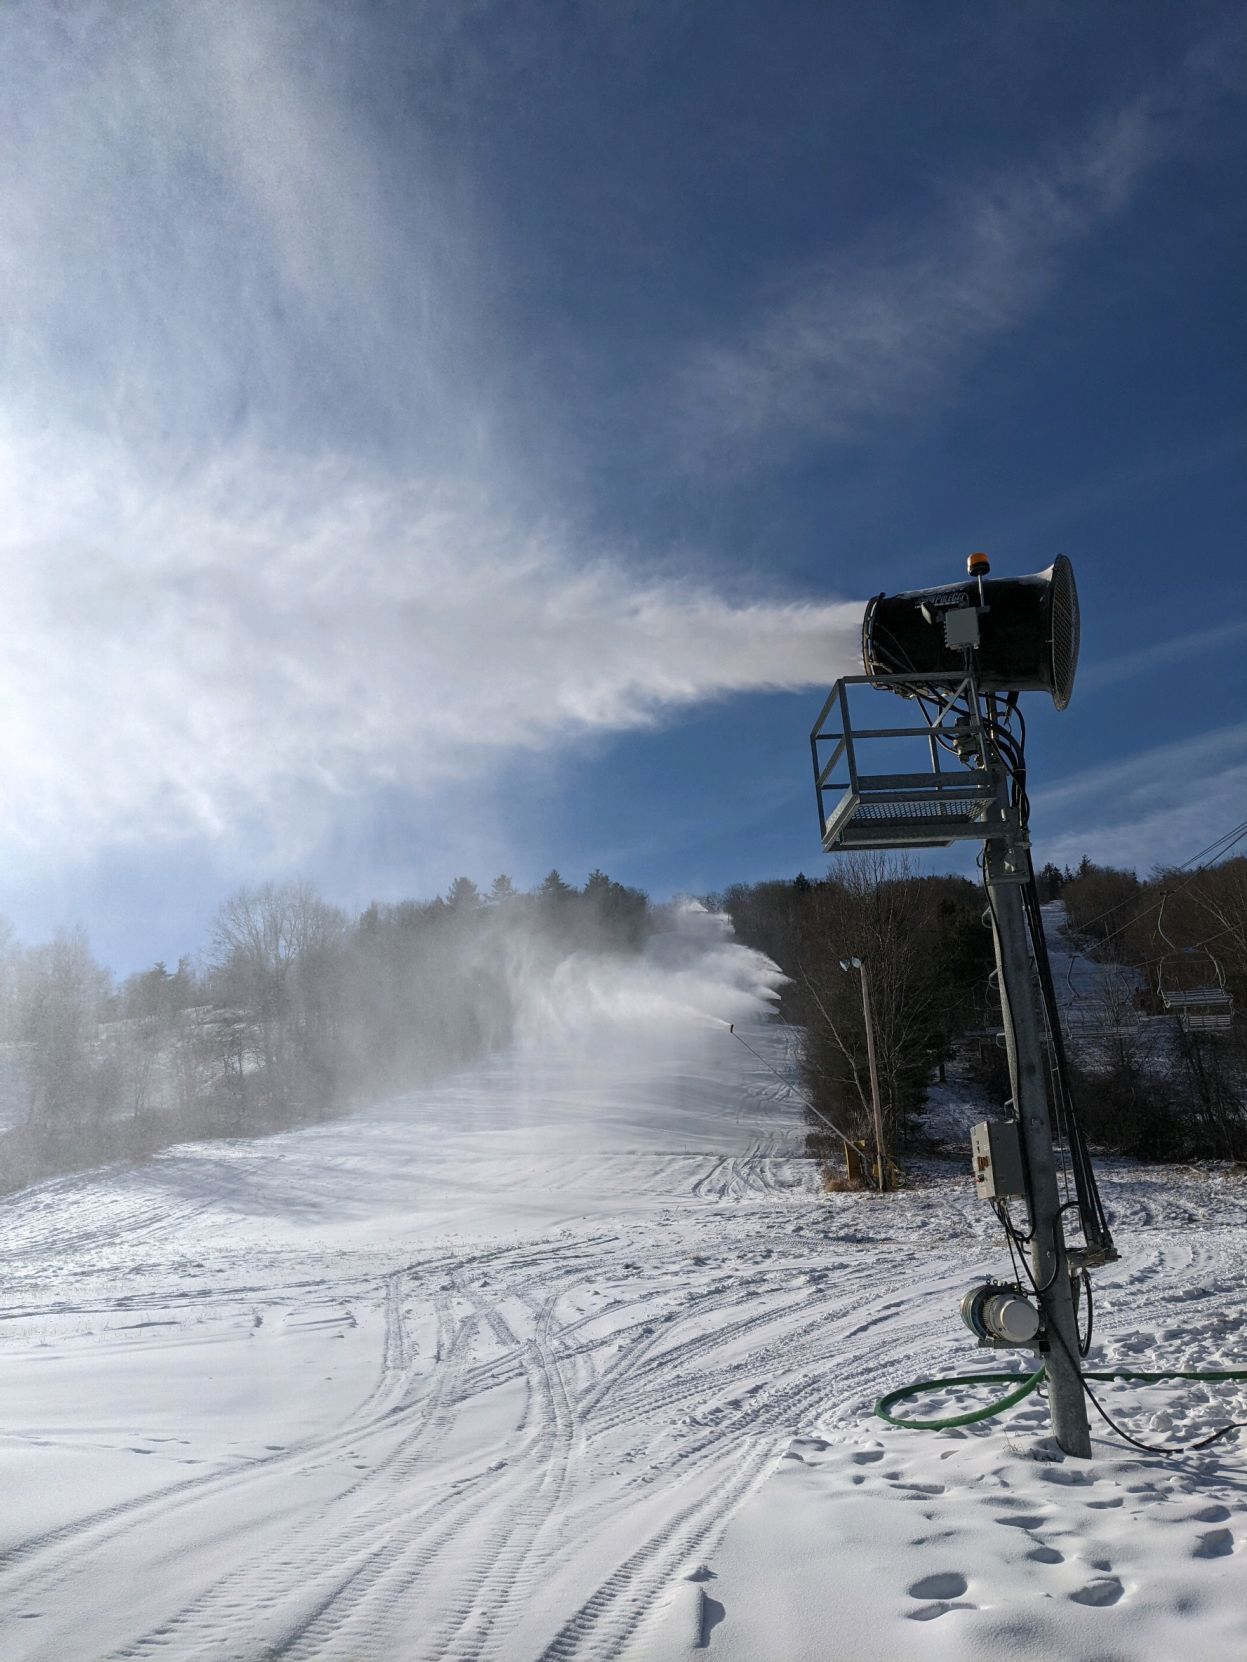 The science behind snowmaking at ski areas - The Washington Post